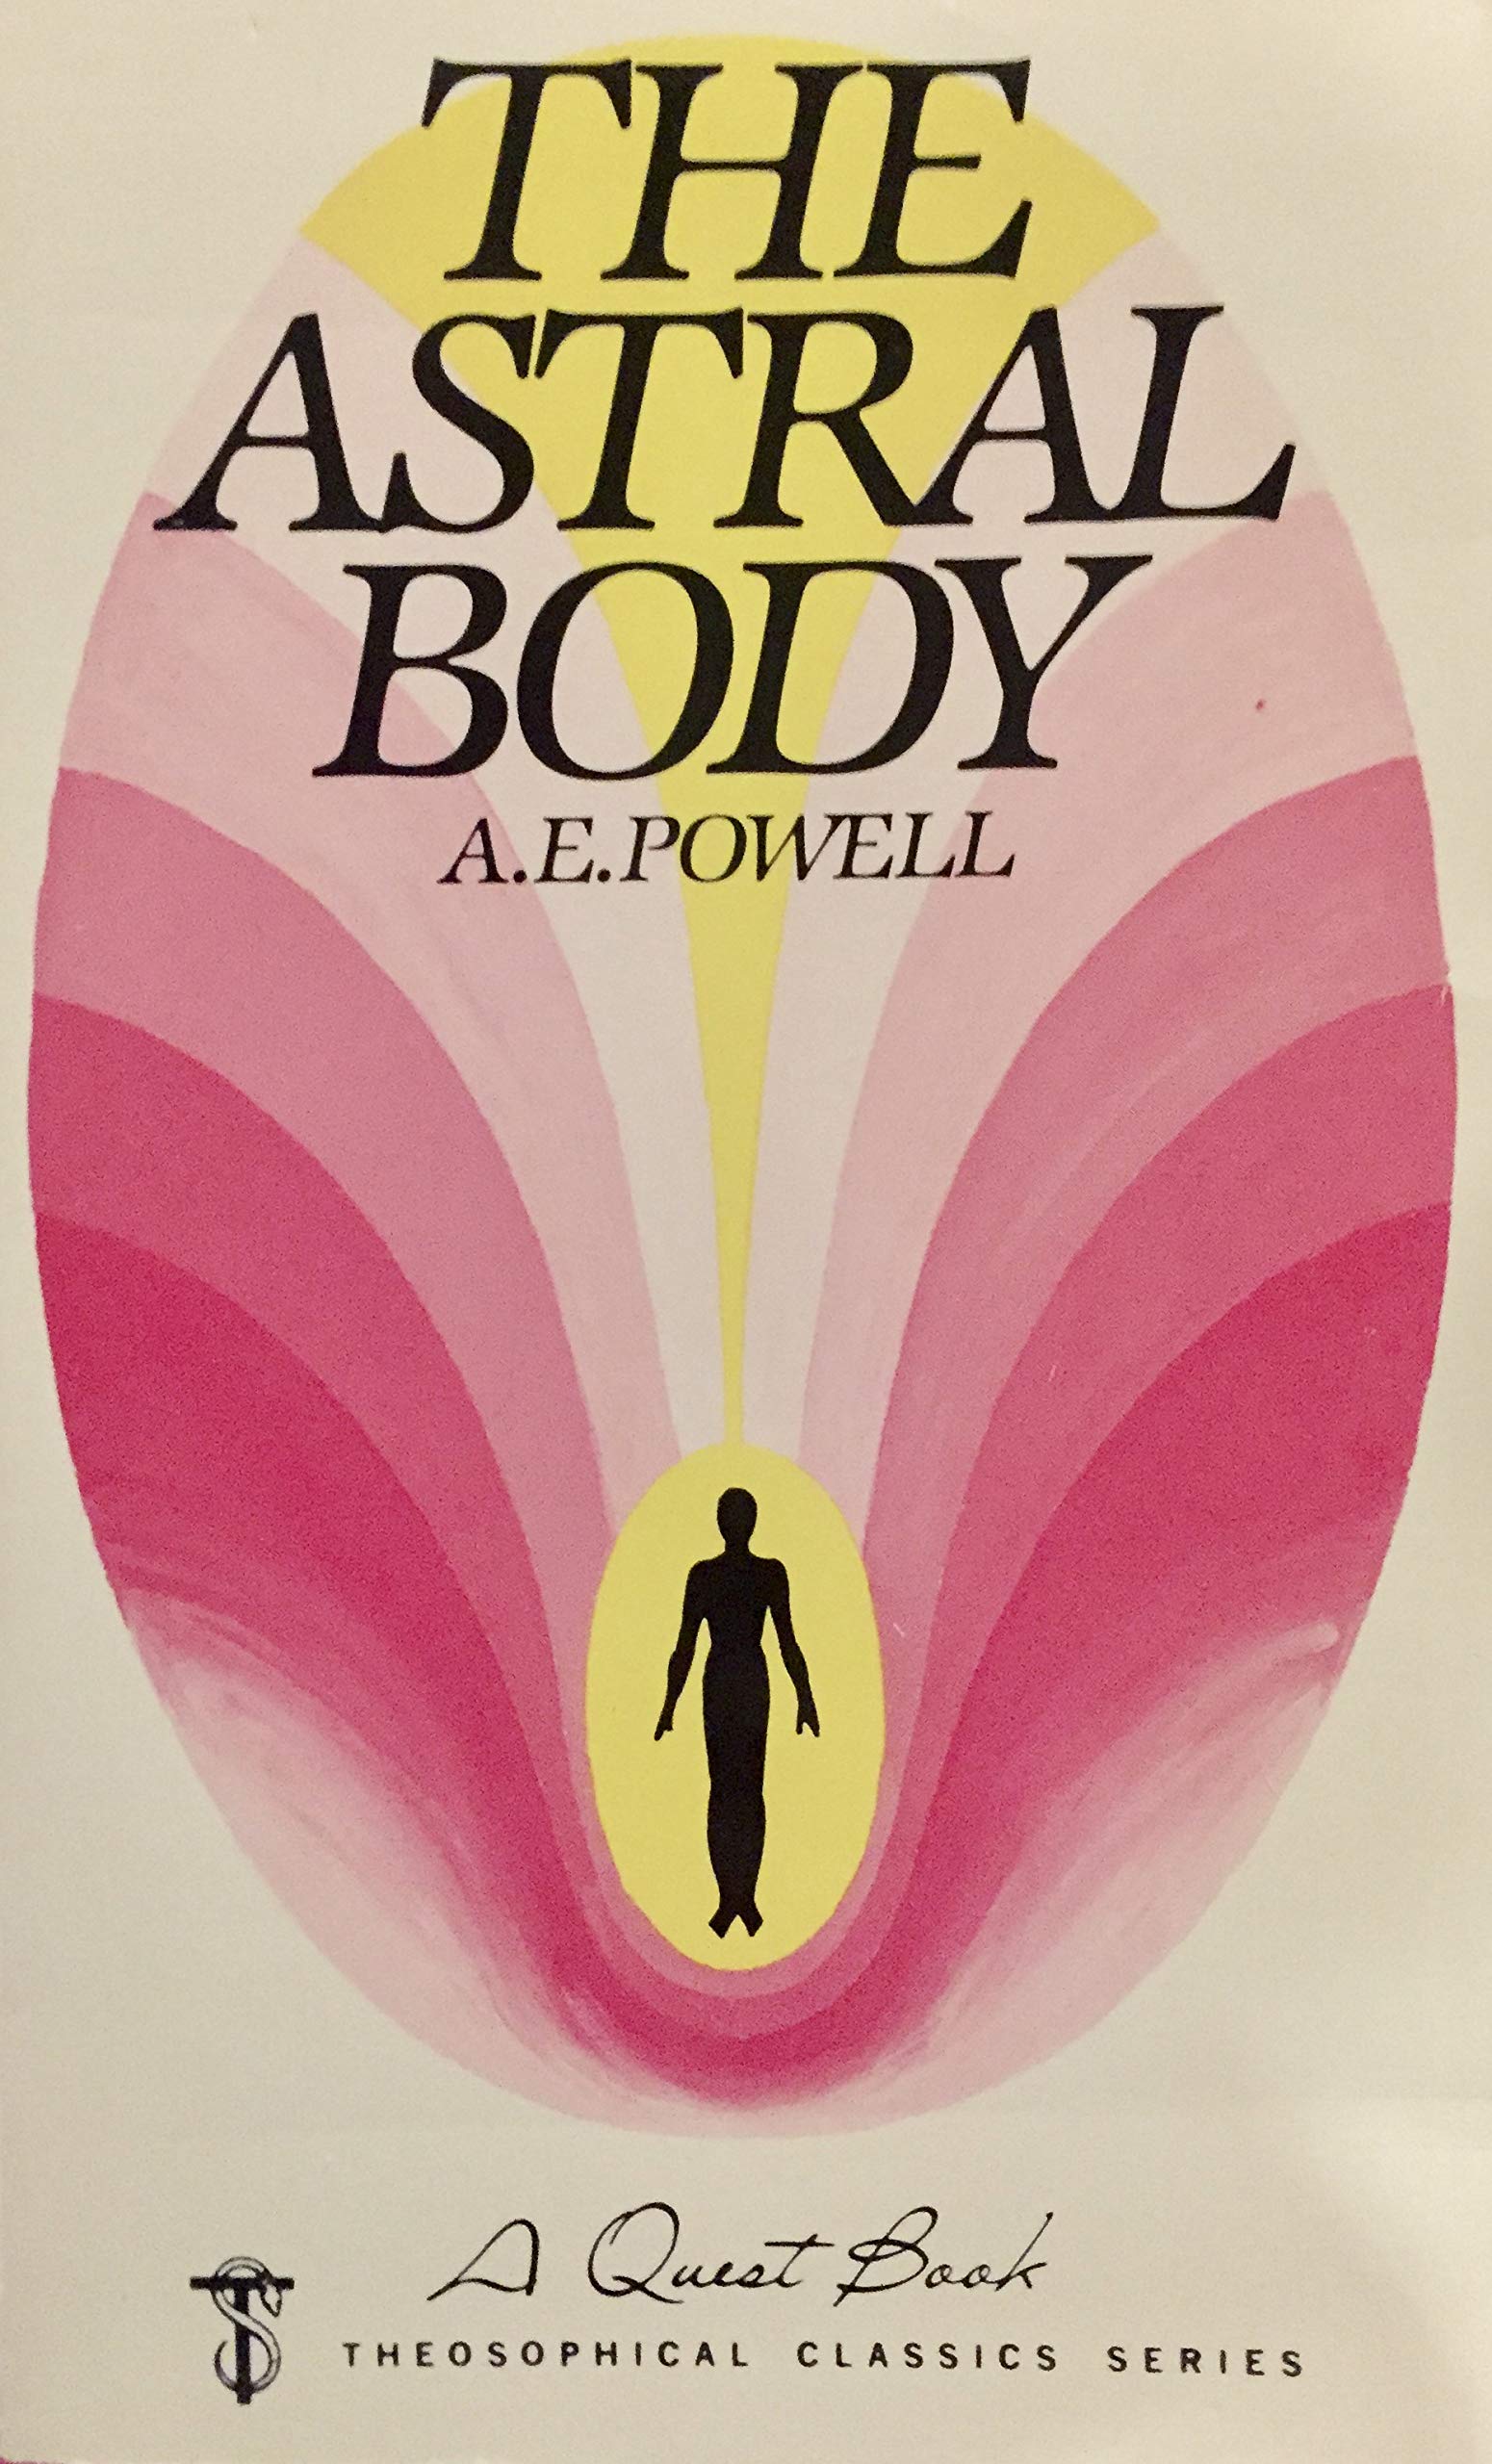 PRELOVED Astral Body, The - A.E Powell